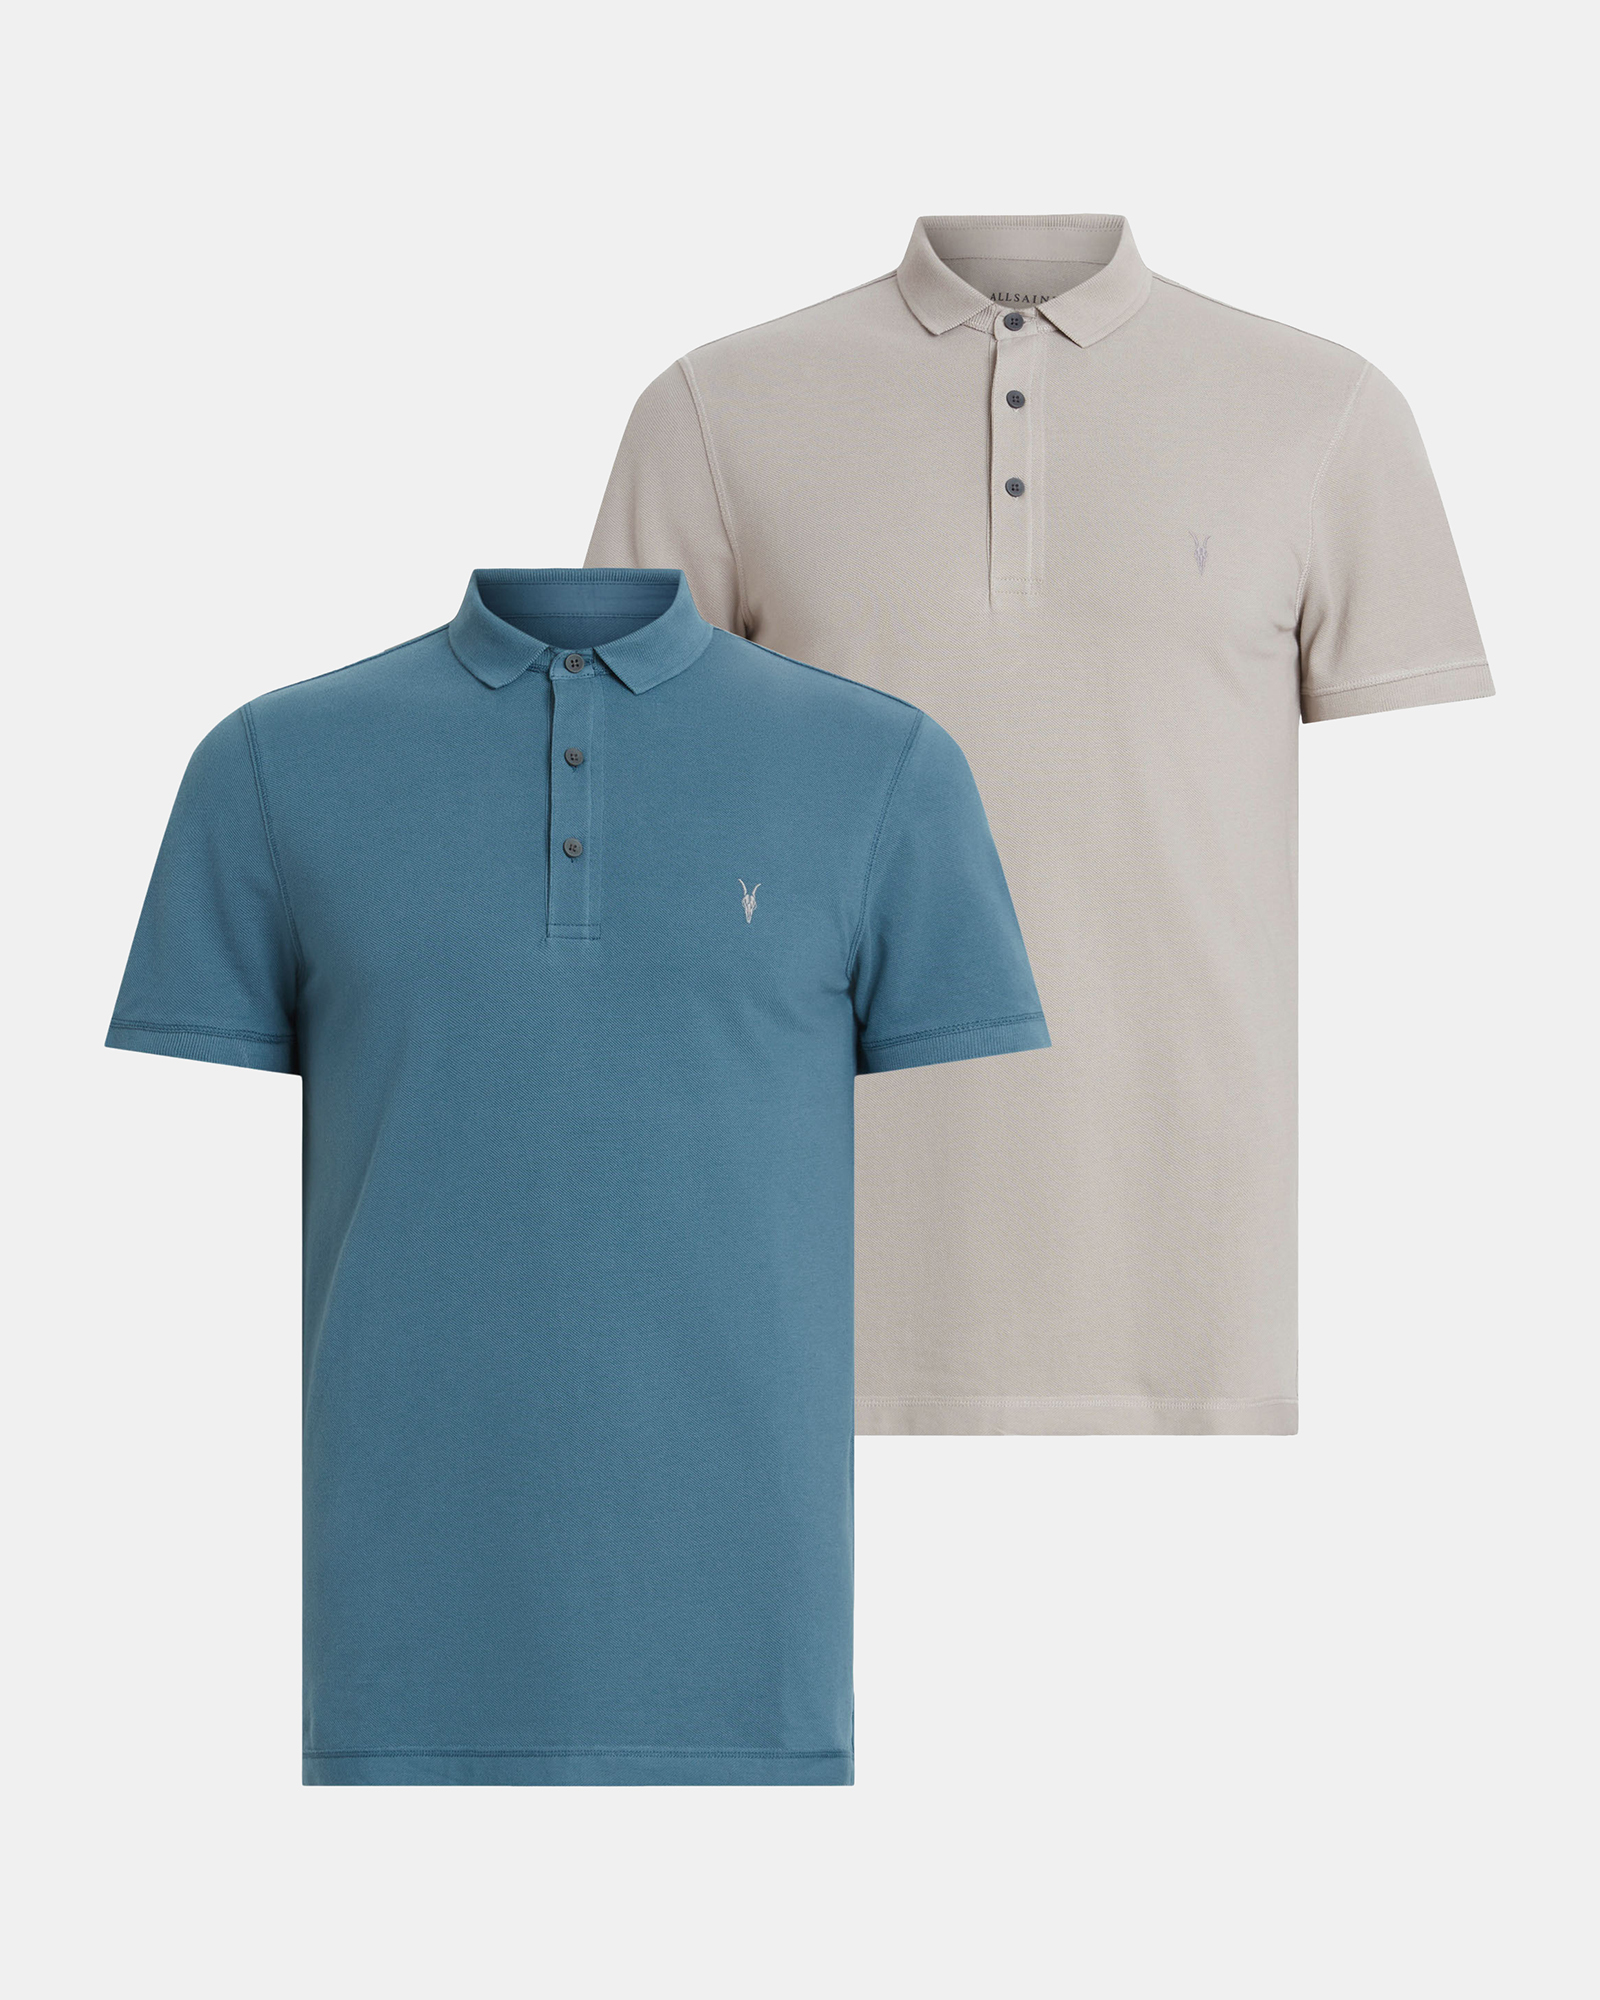 AllSaints Reform Short Sleeve Polo Shirts 2 Pack,, COOL GREY/SUR BLUE